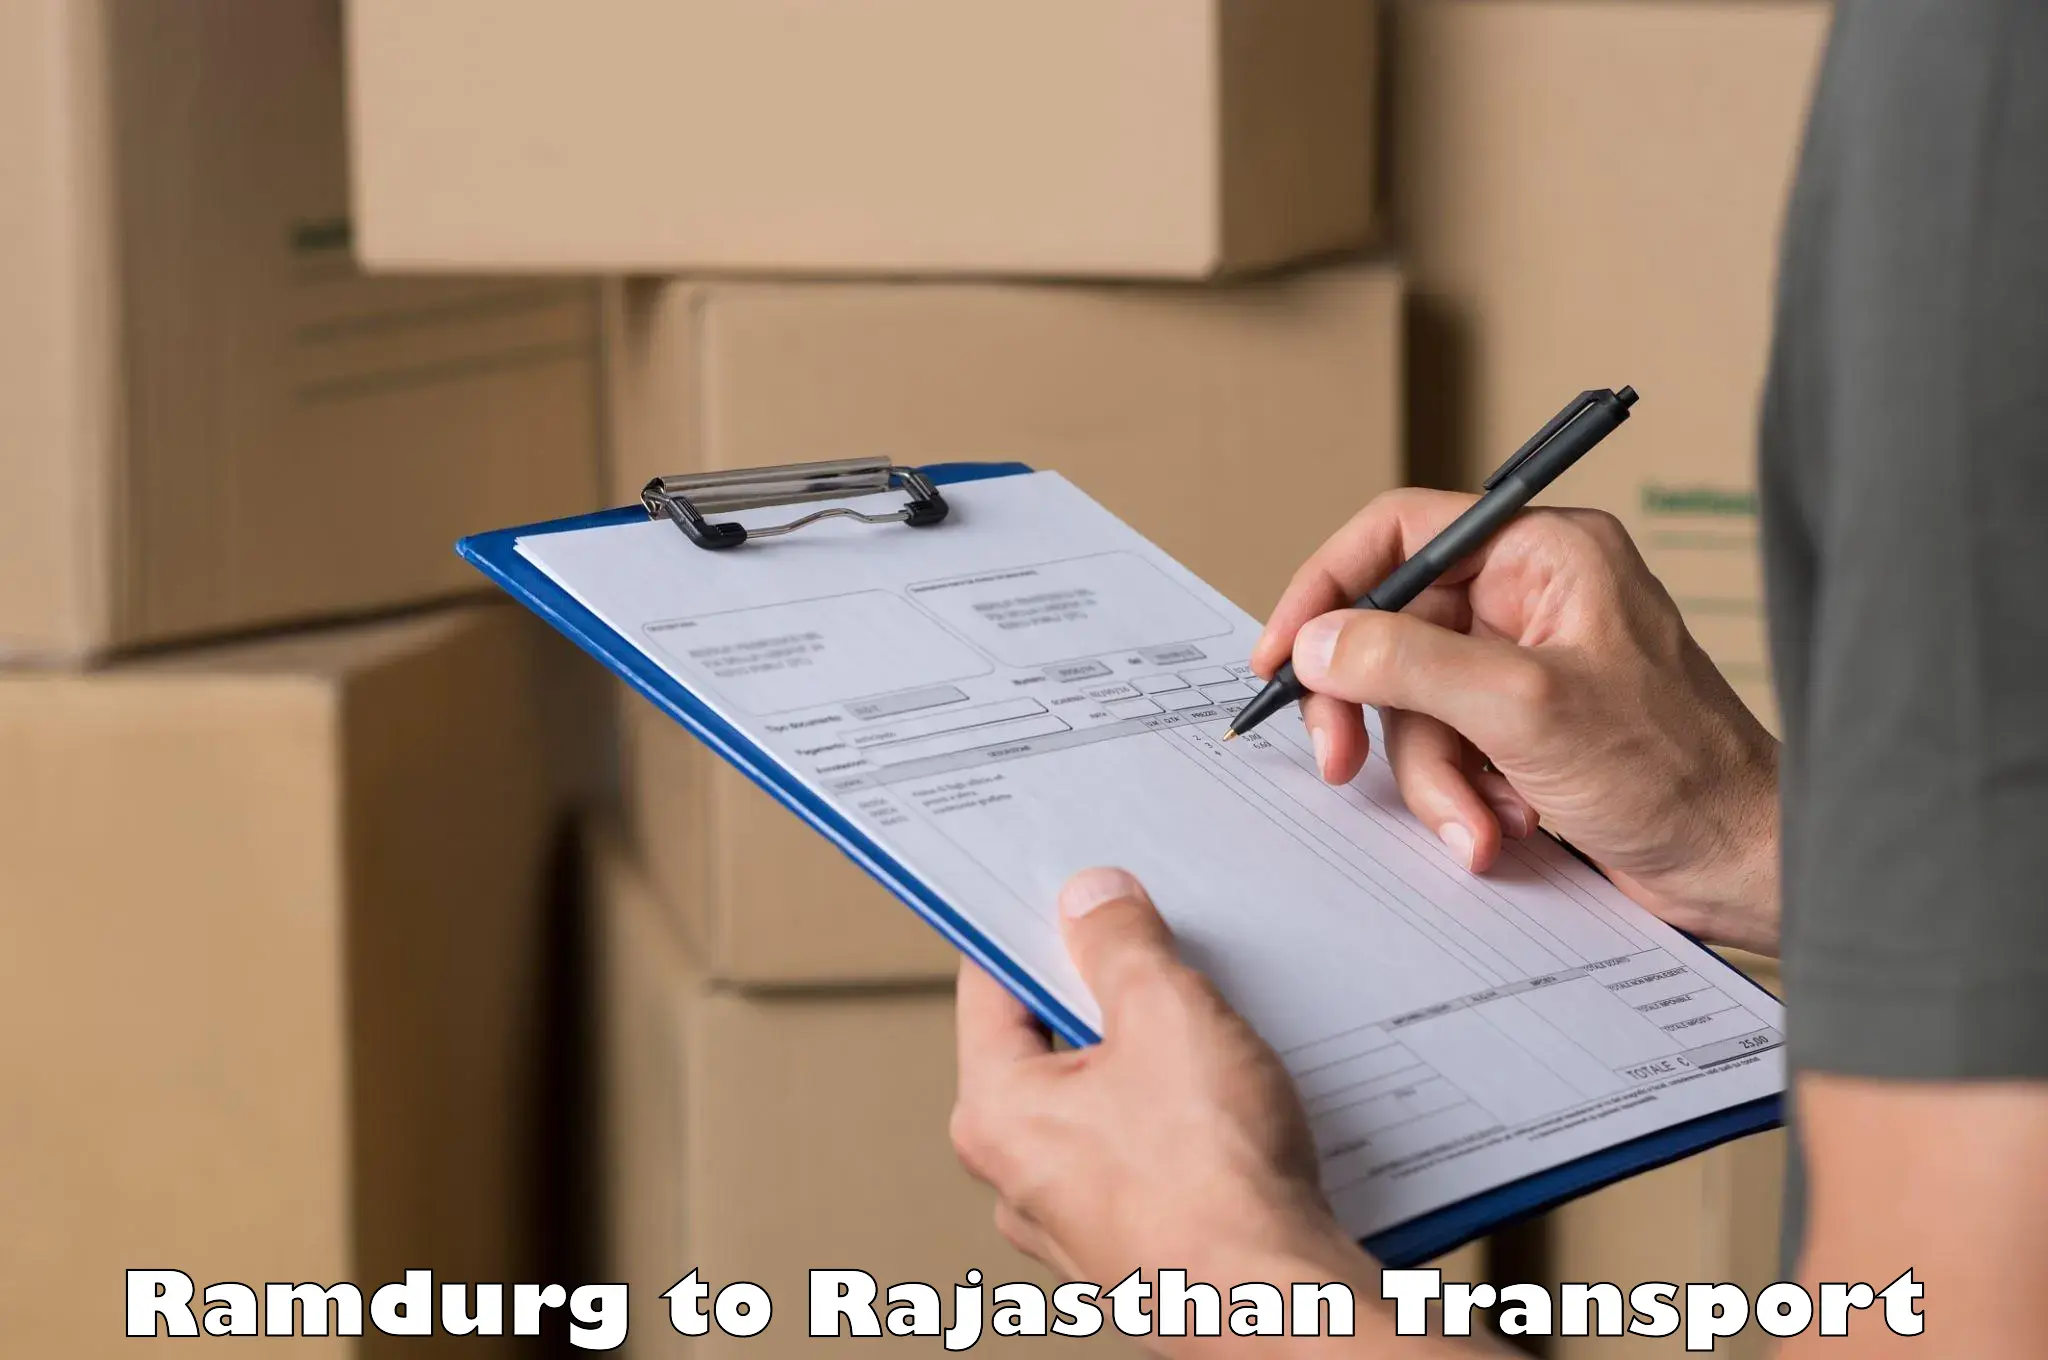 Shipping partner Ramdurg to Jalore